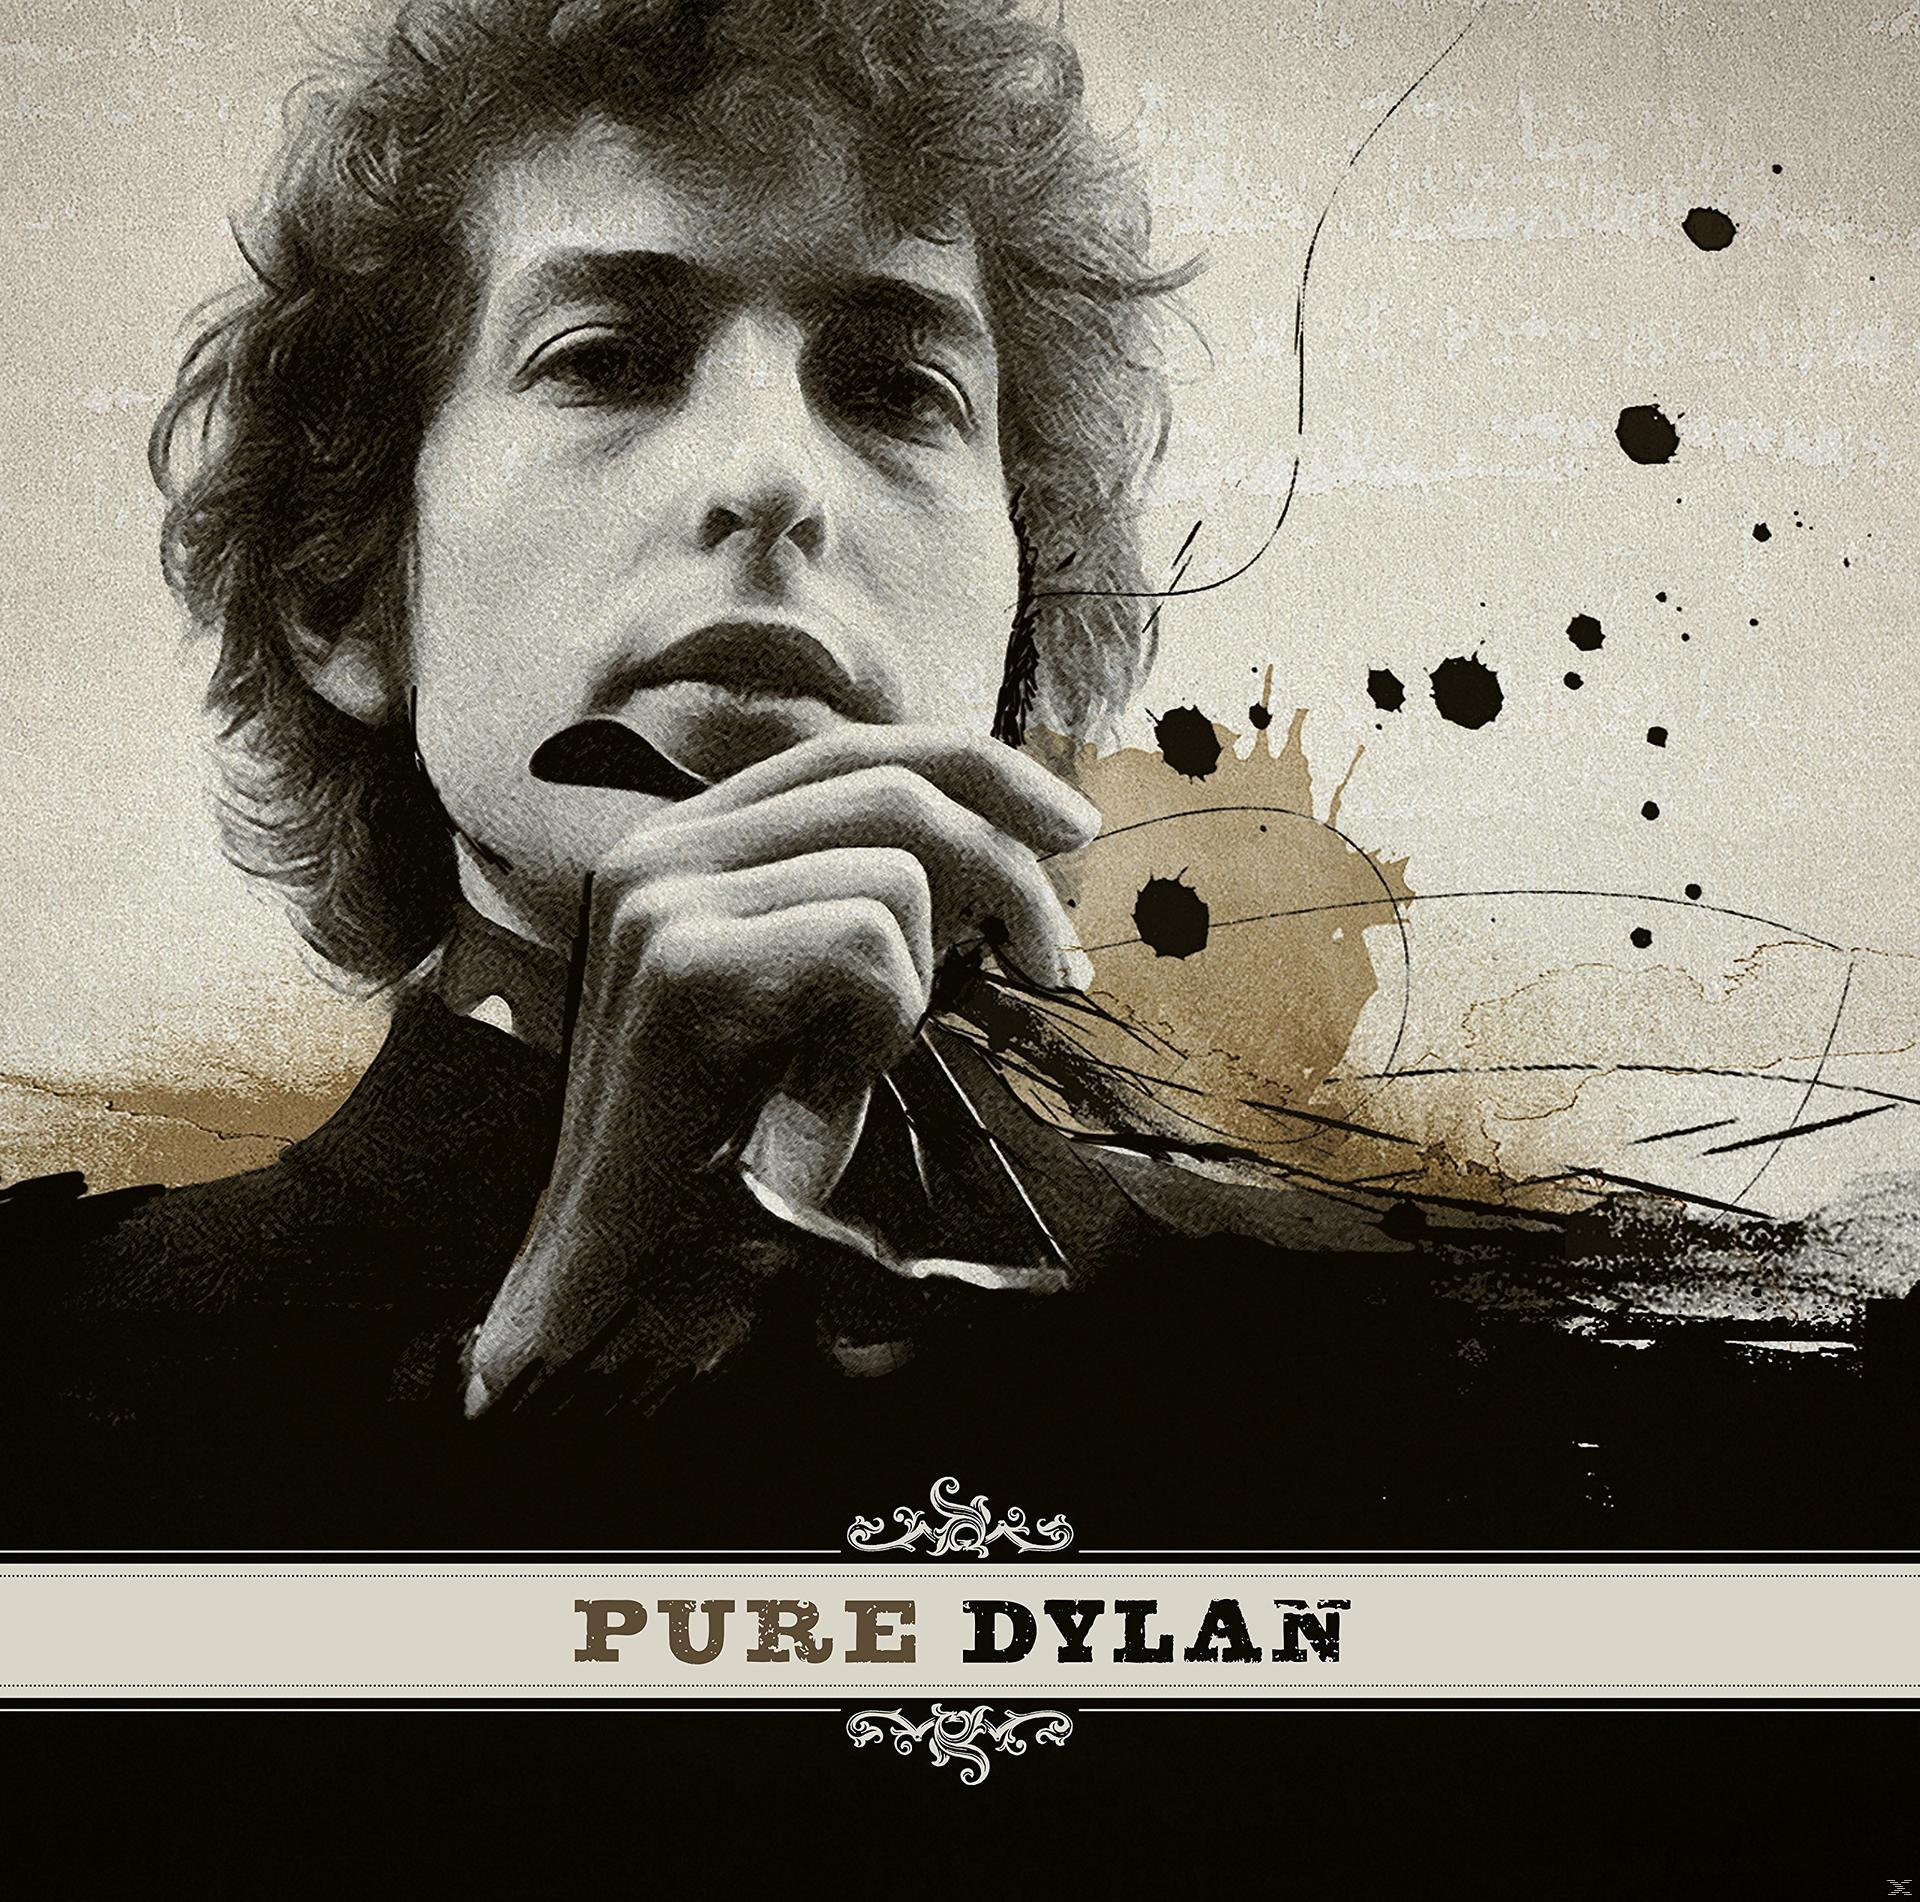 VARIOUS Bob Dylan-An - - Dylan Pure Intimate Bob (Vinyl) At Dylan, Look